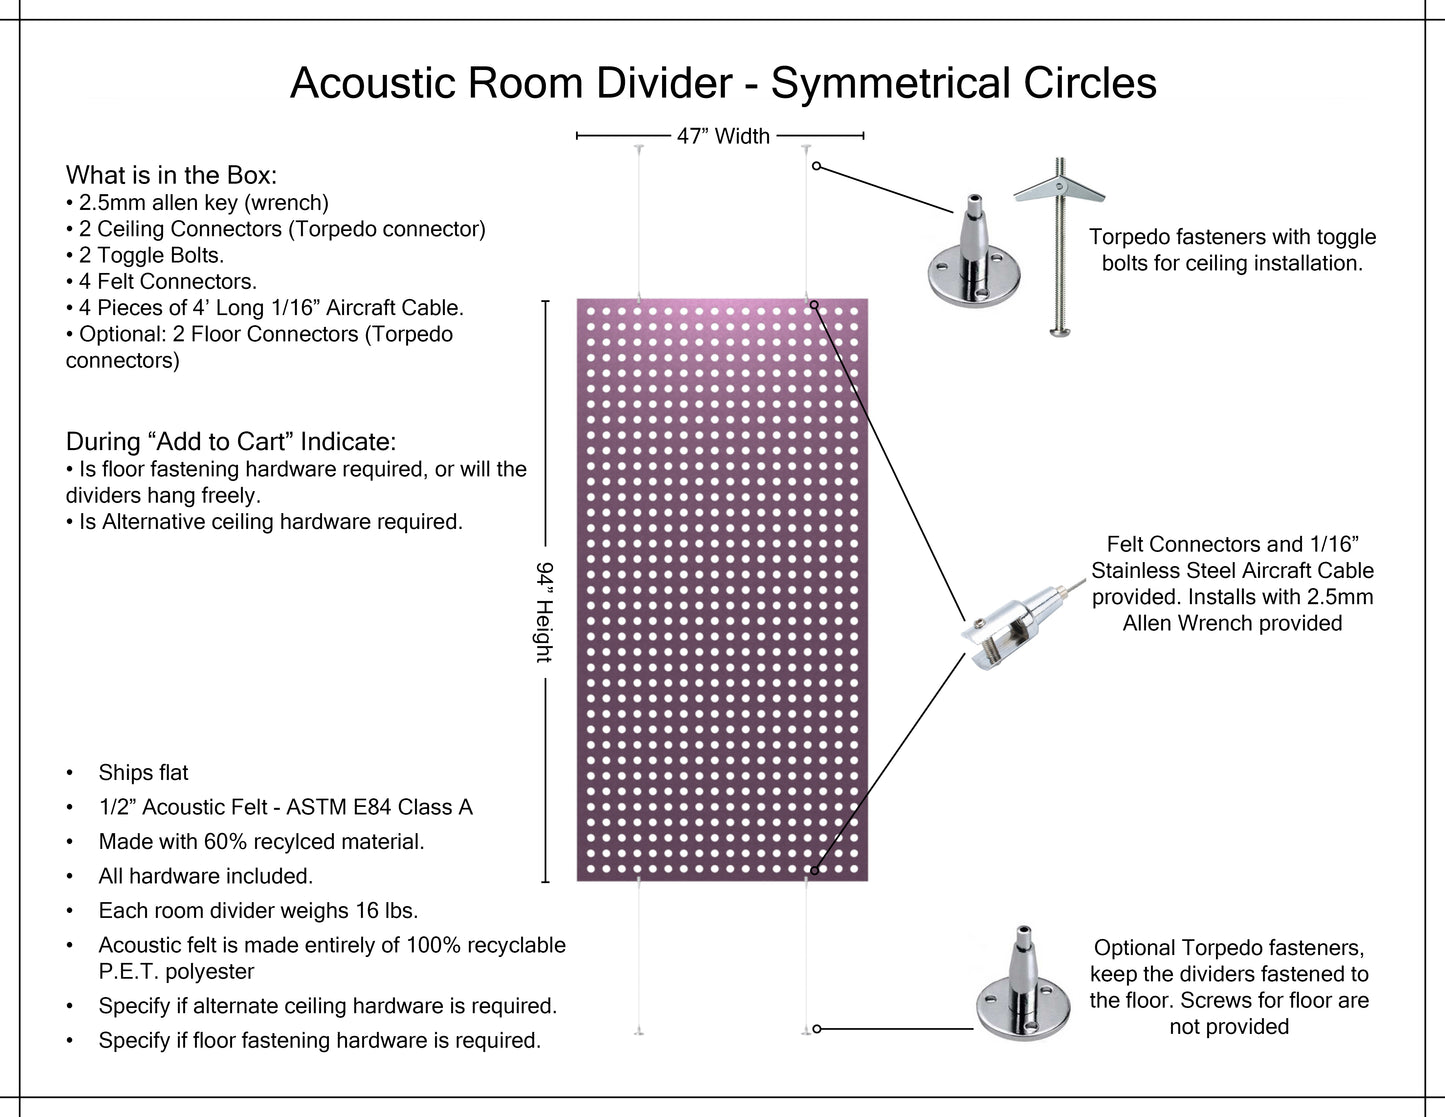 4x8 Acoustic Room Divider - Symmetrical Circles